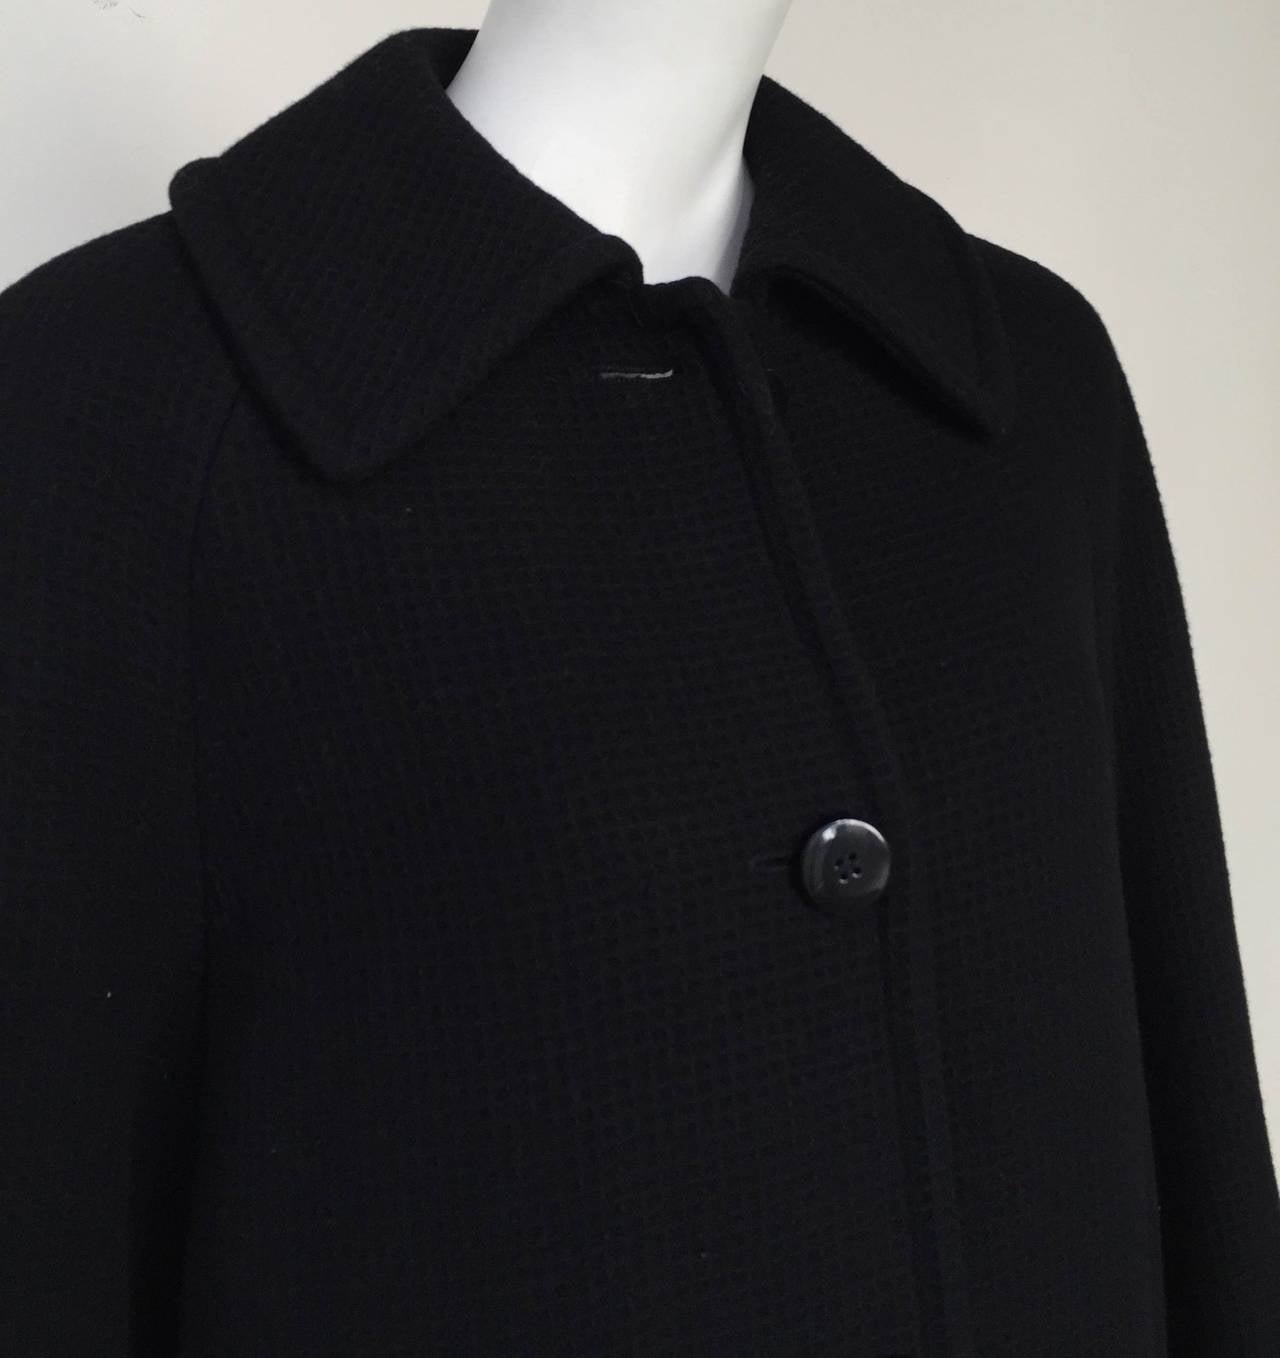 Women's Missoni Donna 90s wool coat size 8.